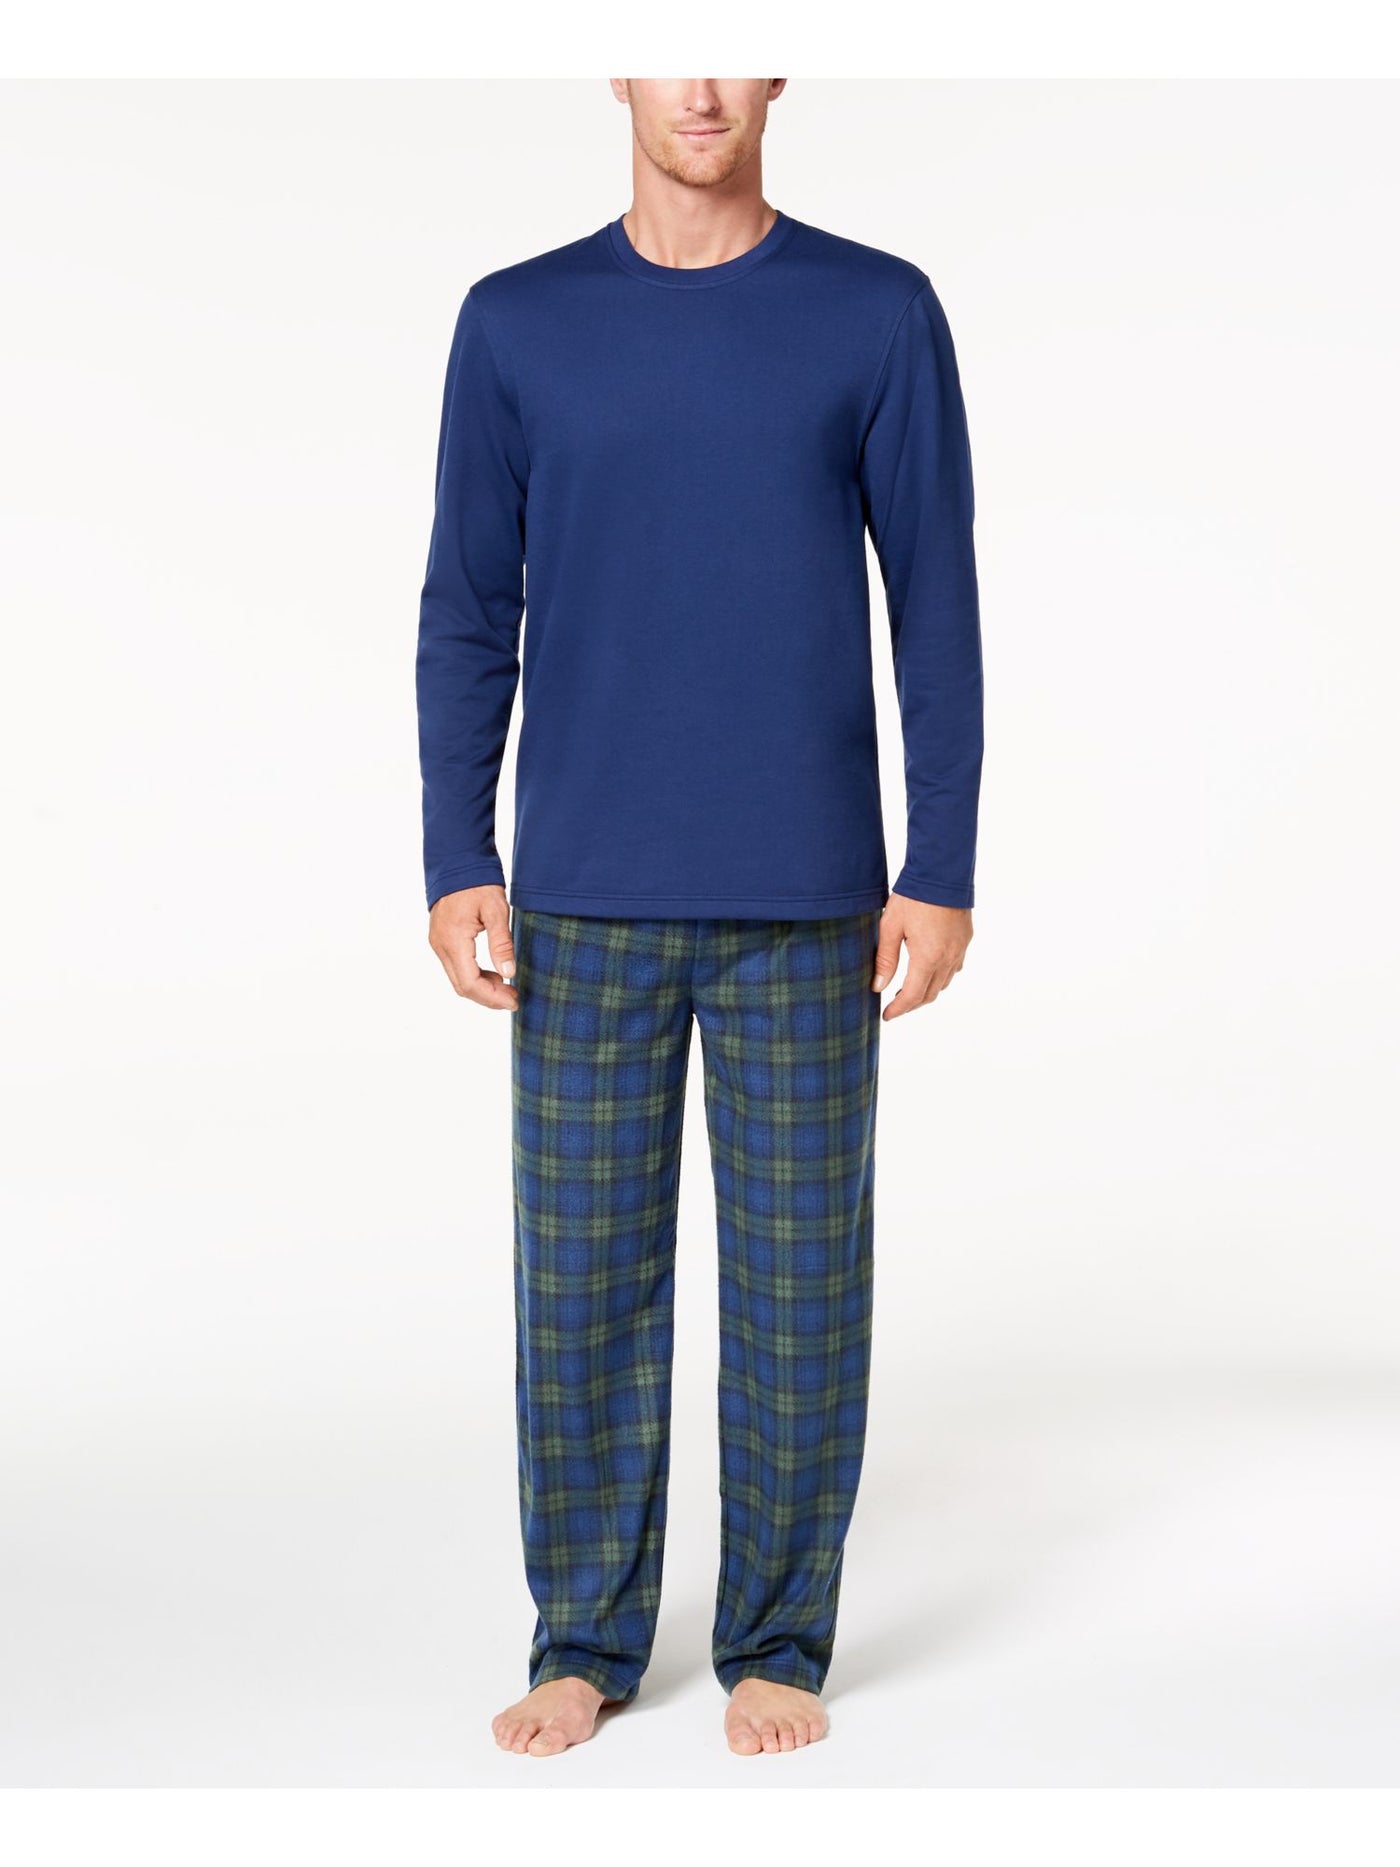 CLUBROOM Mens Blue Drawstring Long Sleeve T-Shirt Top Straight leg Pants Pajamas XL